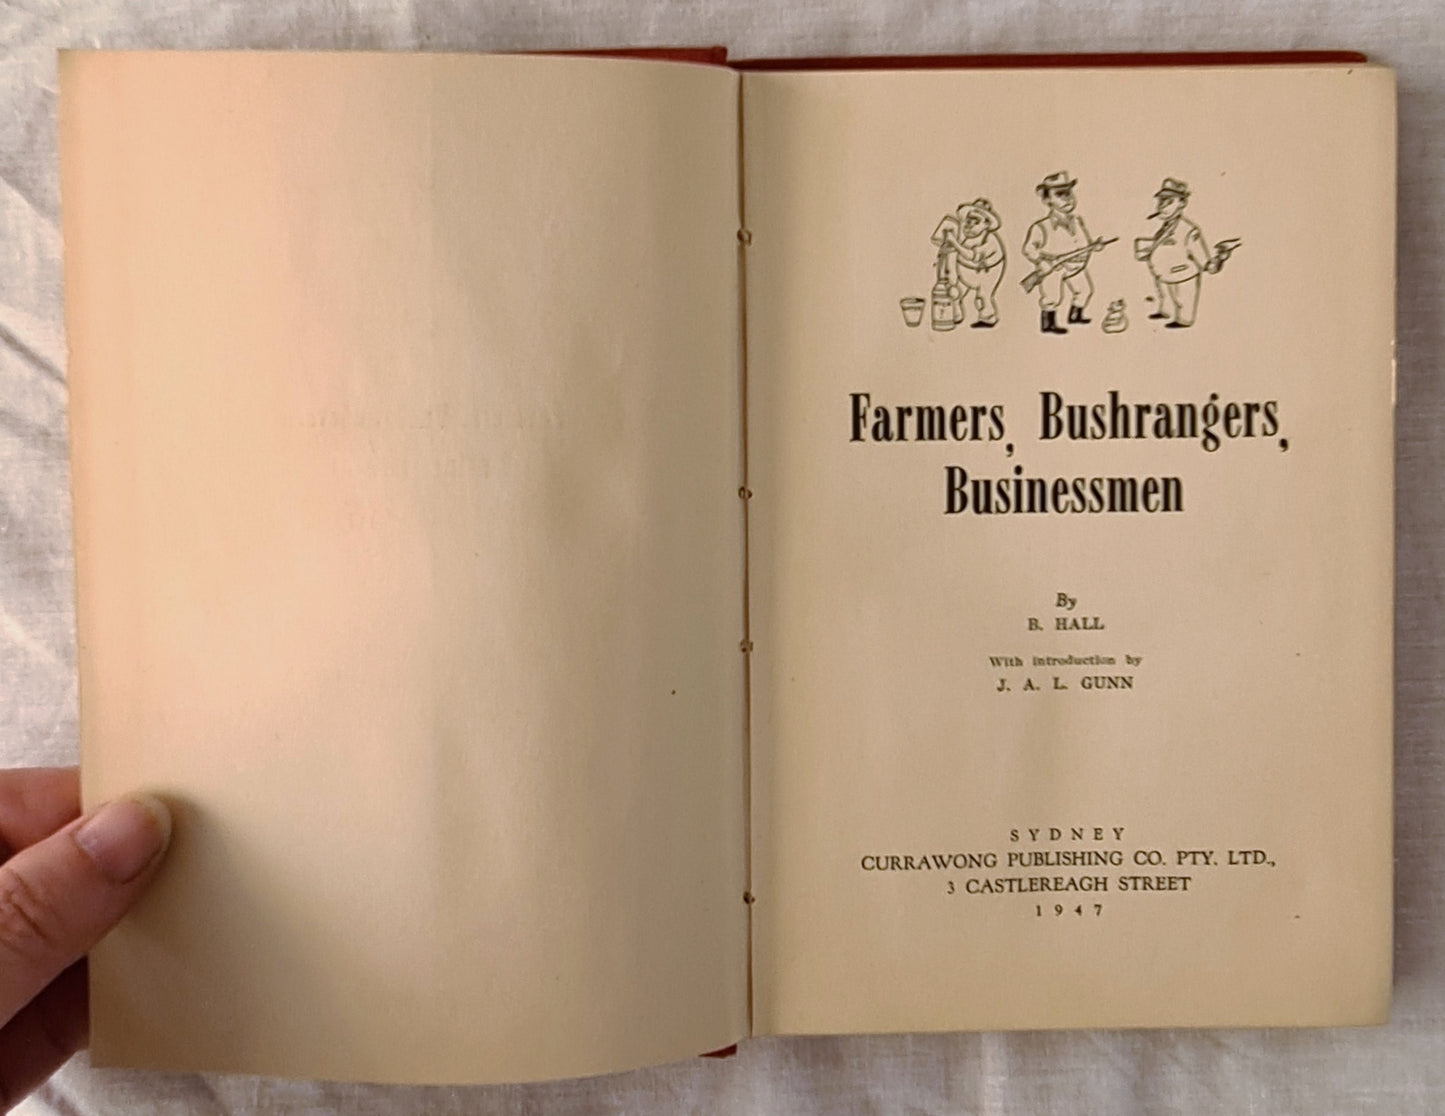 Farmers, Bushrangers, Businessmen by B. Hall